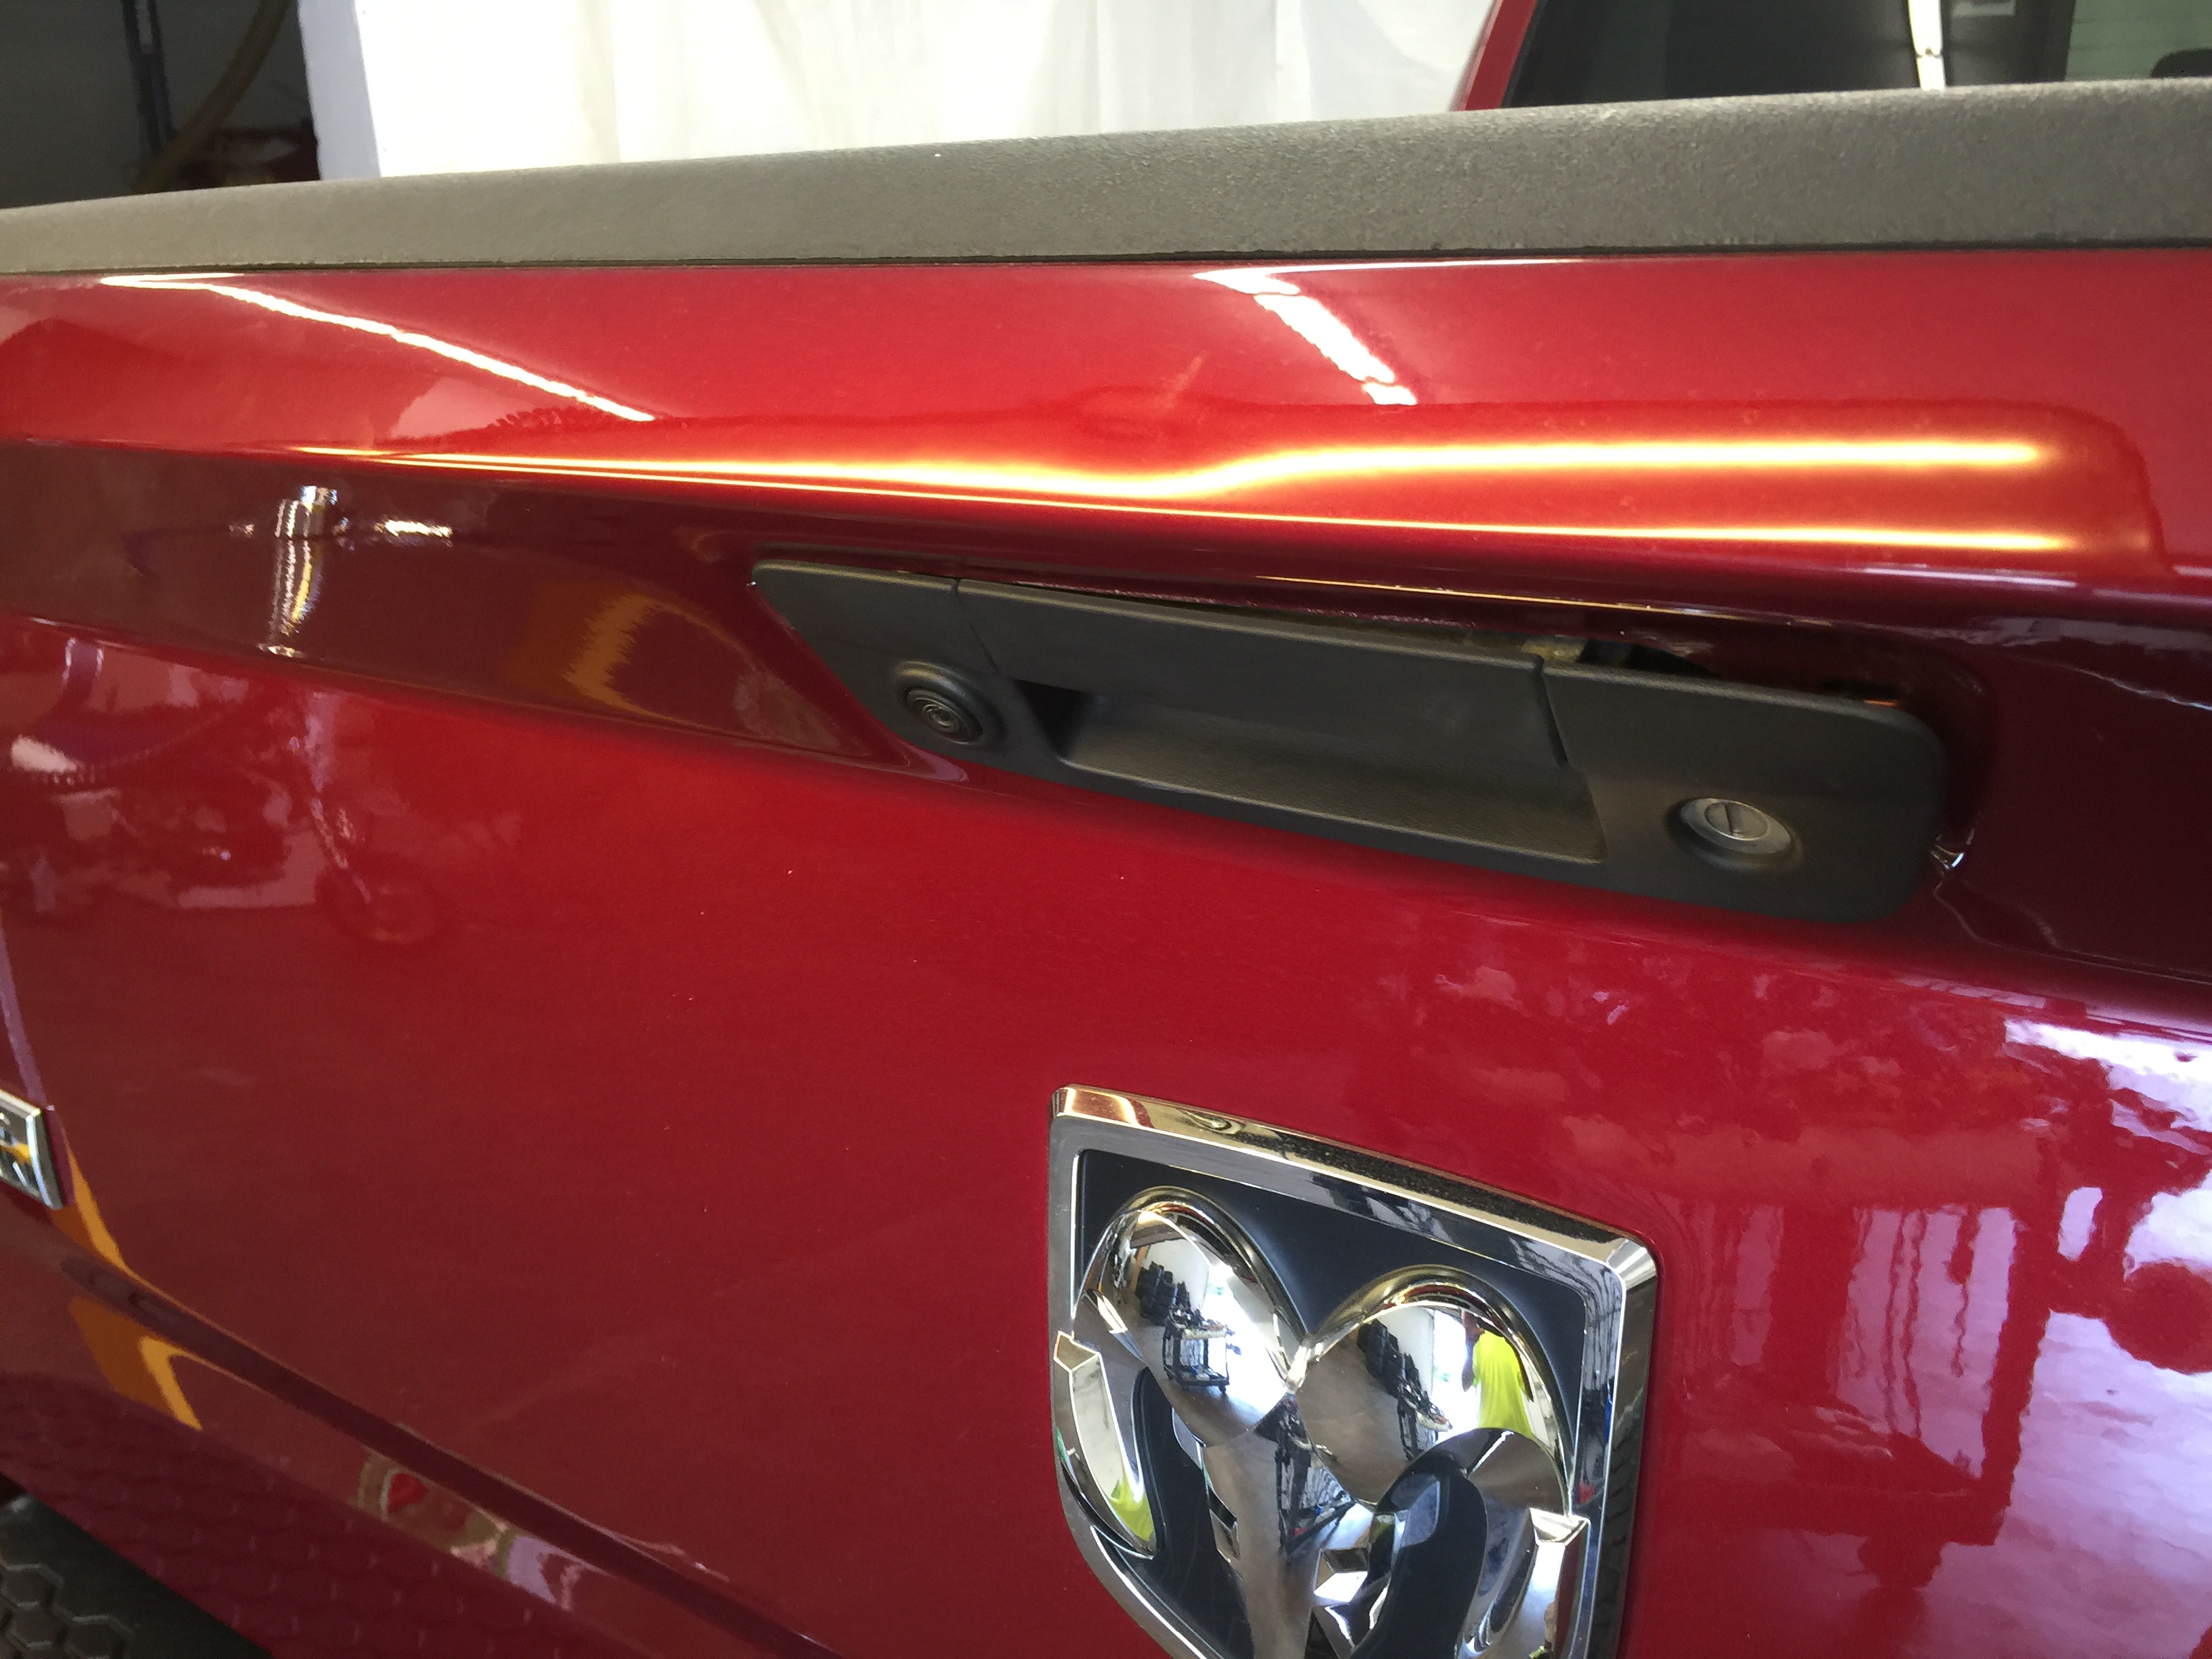 2015 Dodge Ram tailgate Dent repair in Springfield, IL, by Michael Bocek of http://217dent.com 217 dent Paintless Dent Repair